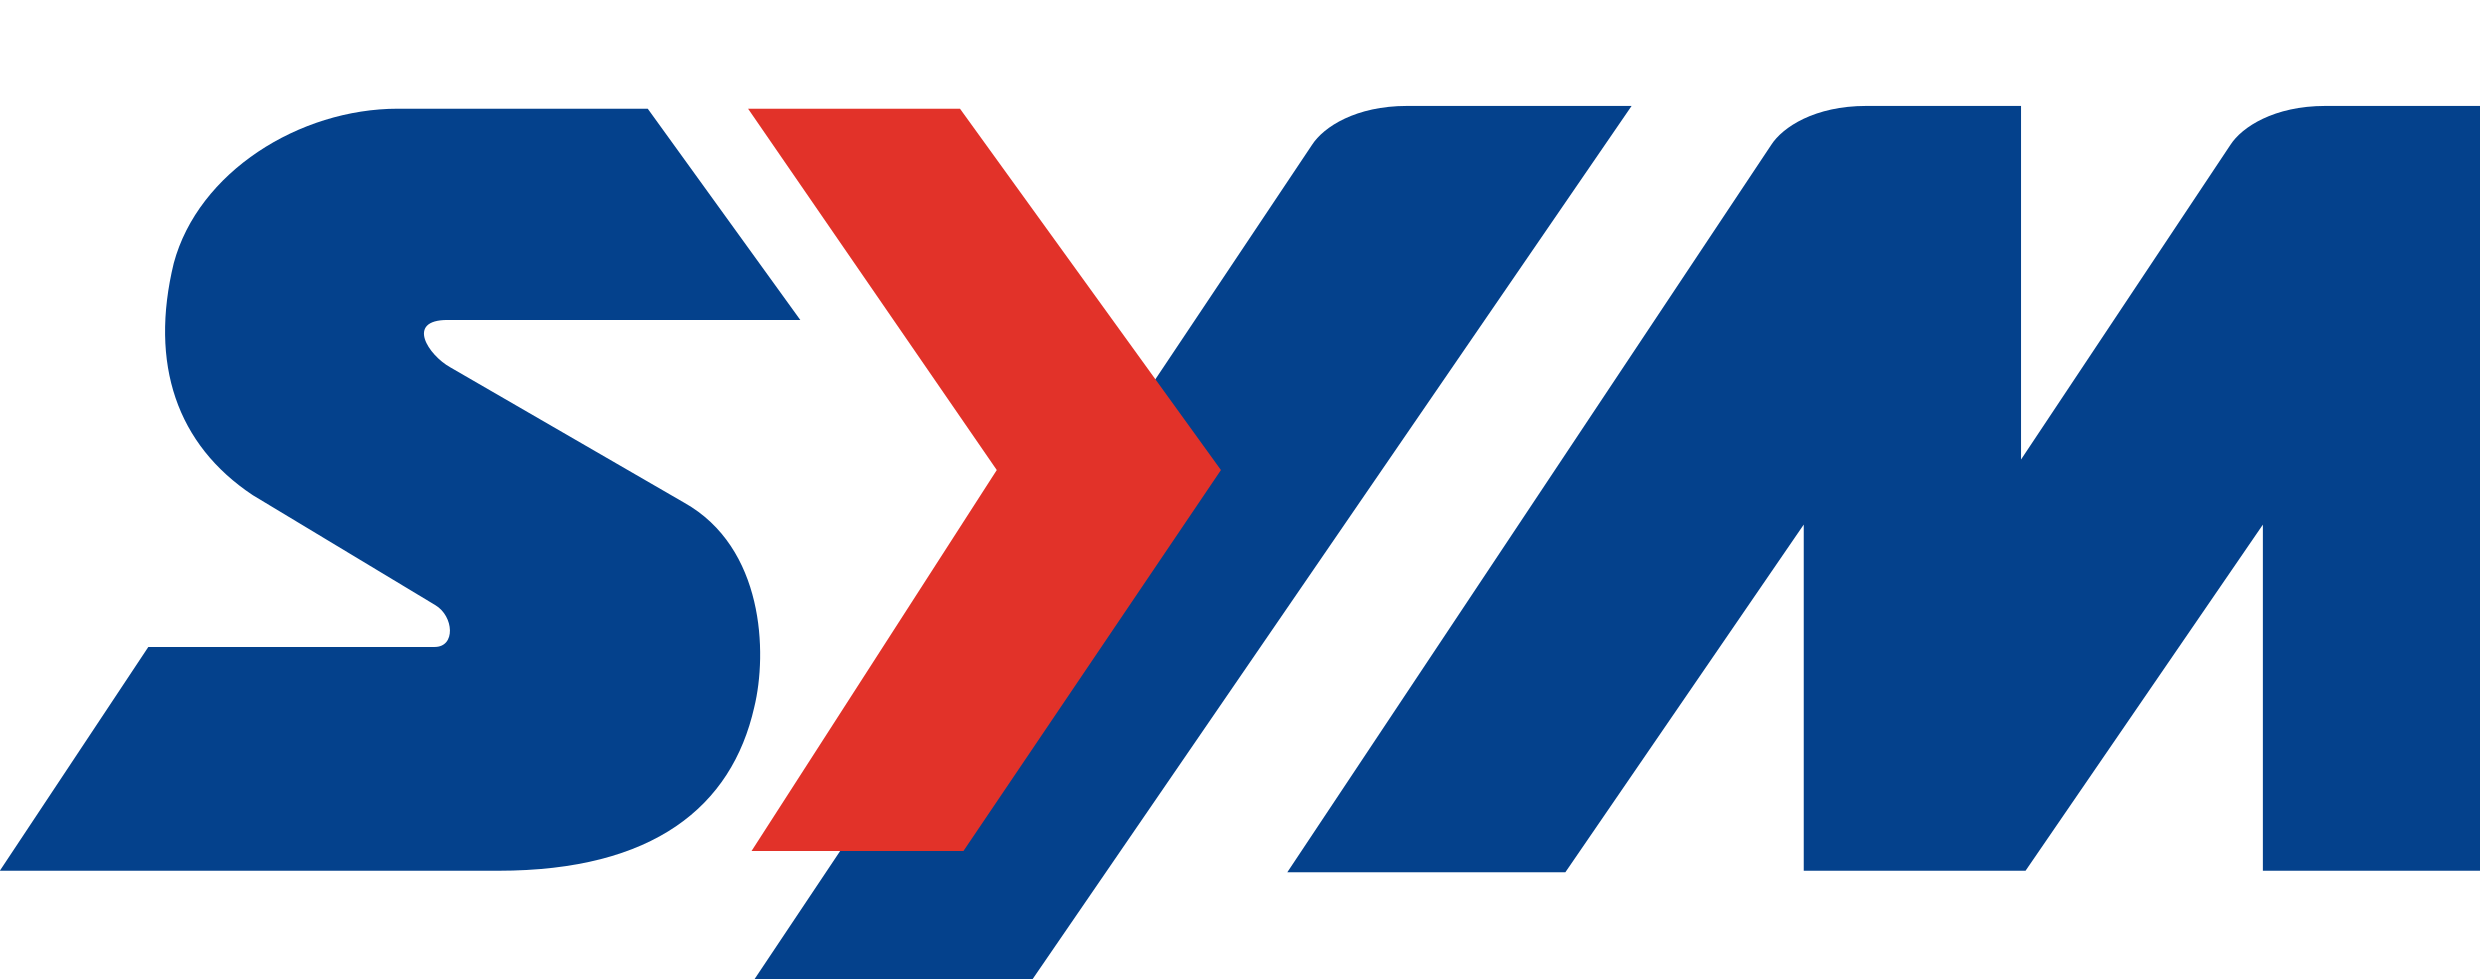 SYM_logo_of_Sanyang_Motor_20180408.svg